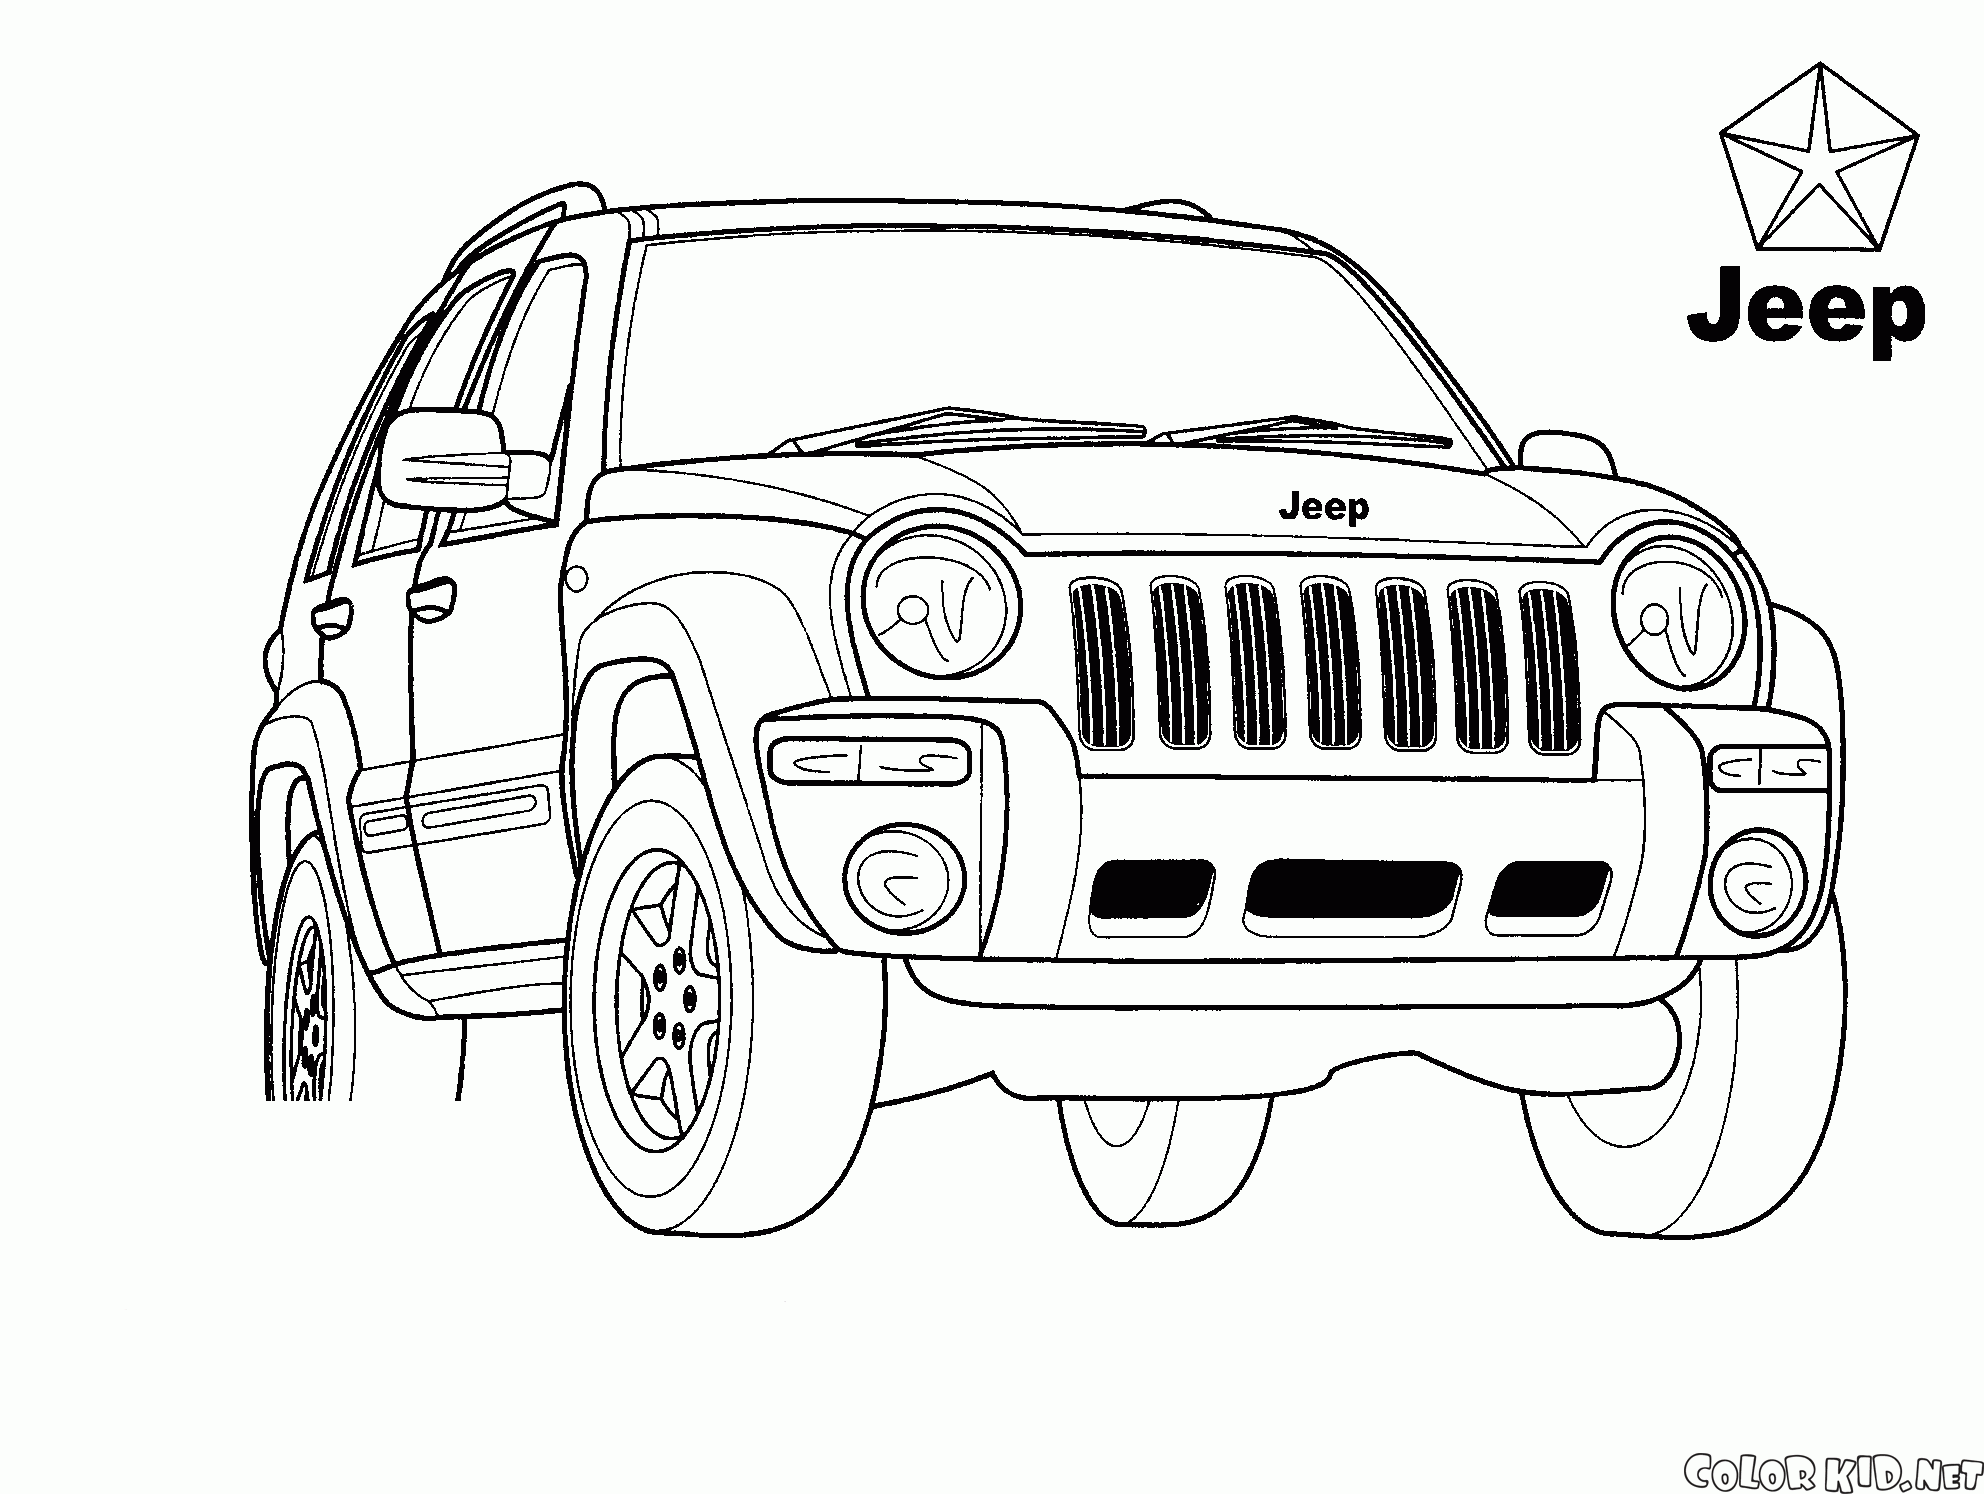 Universal-Jeep